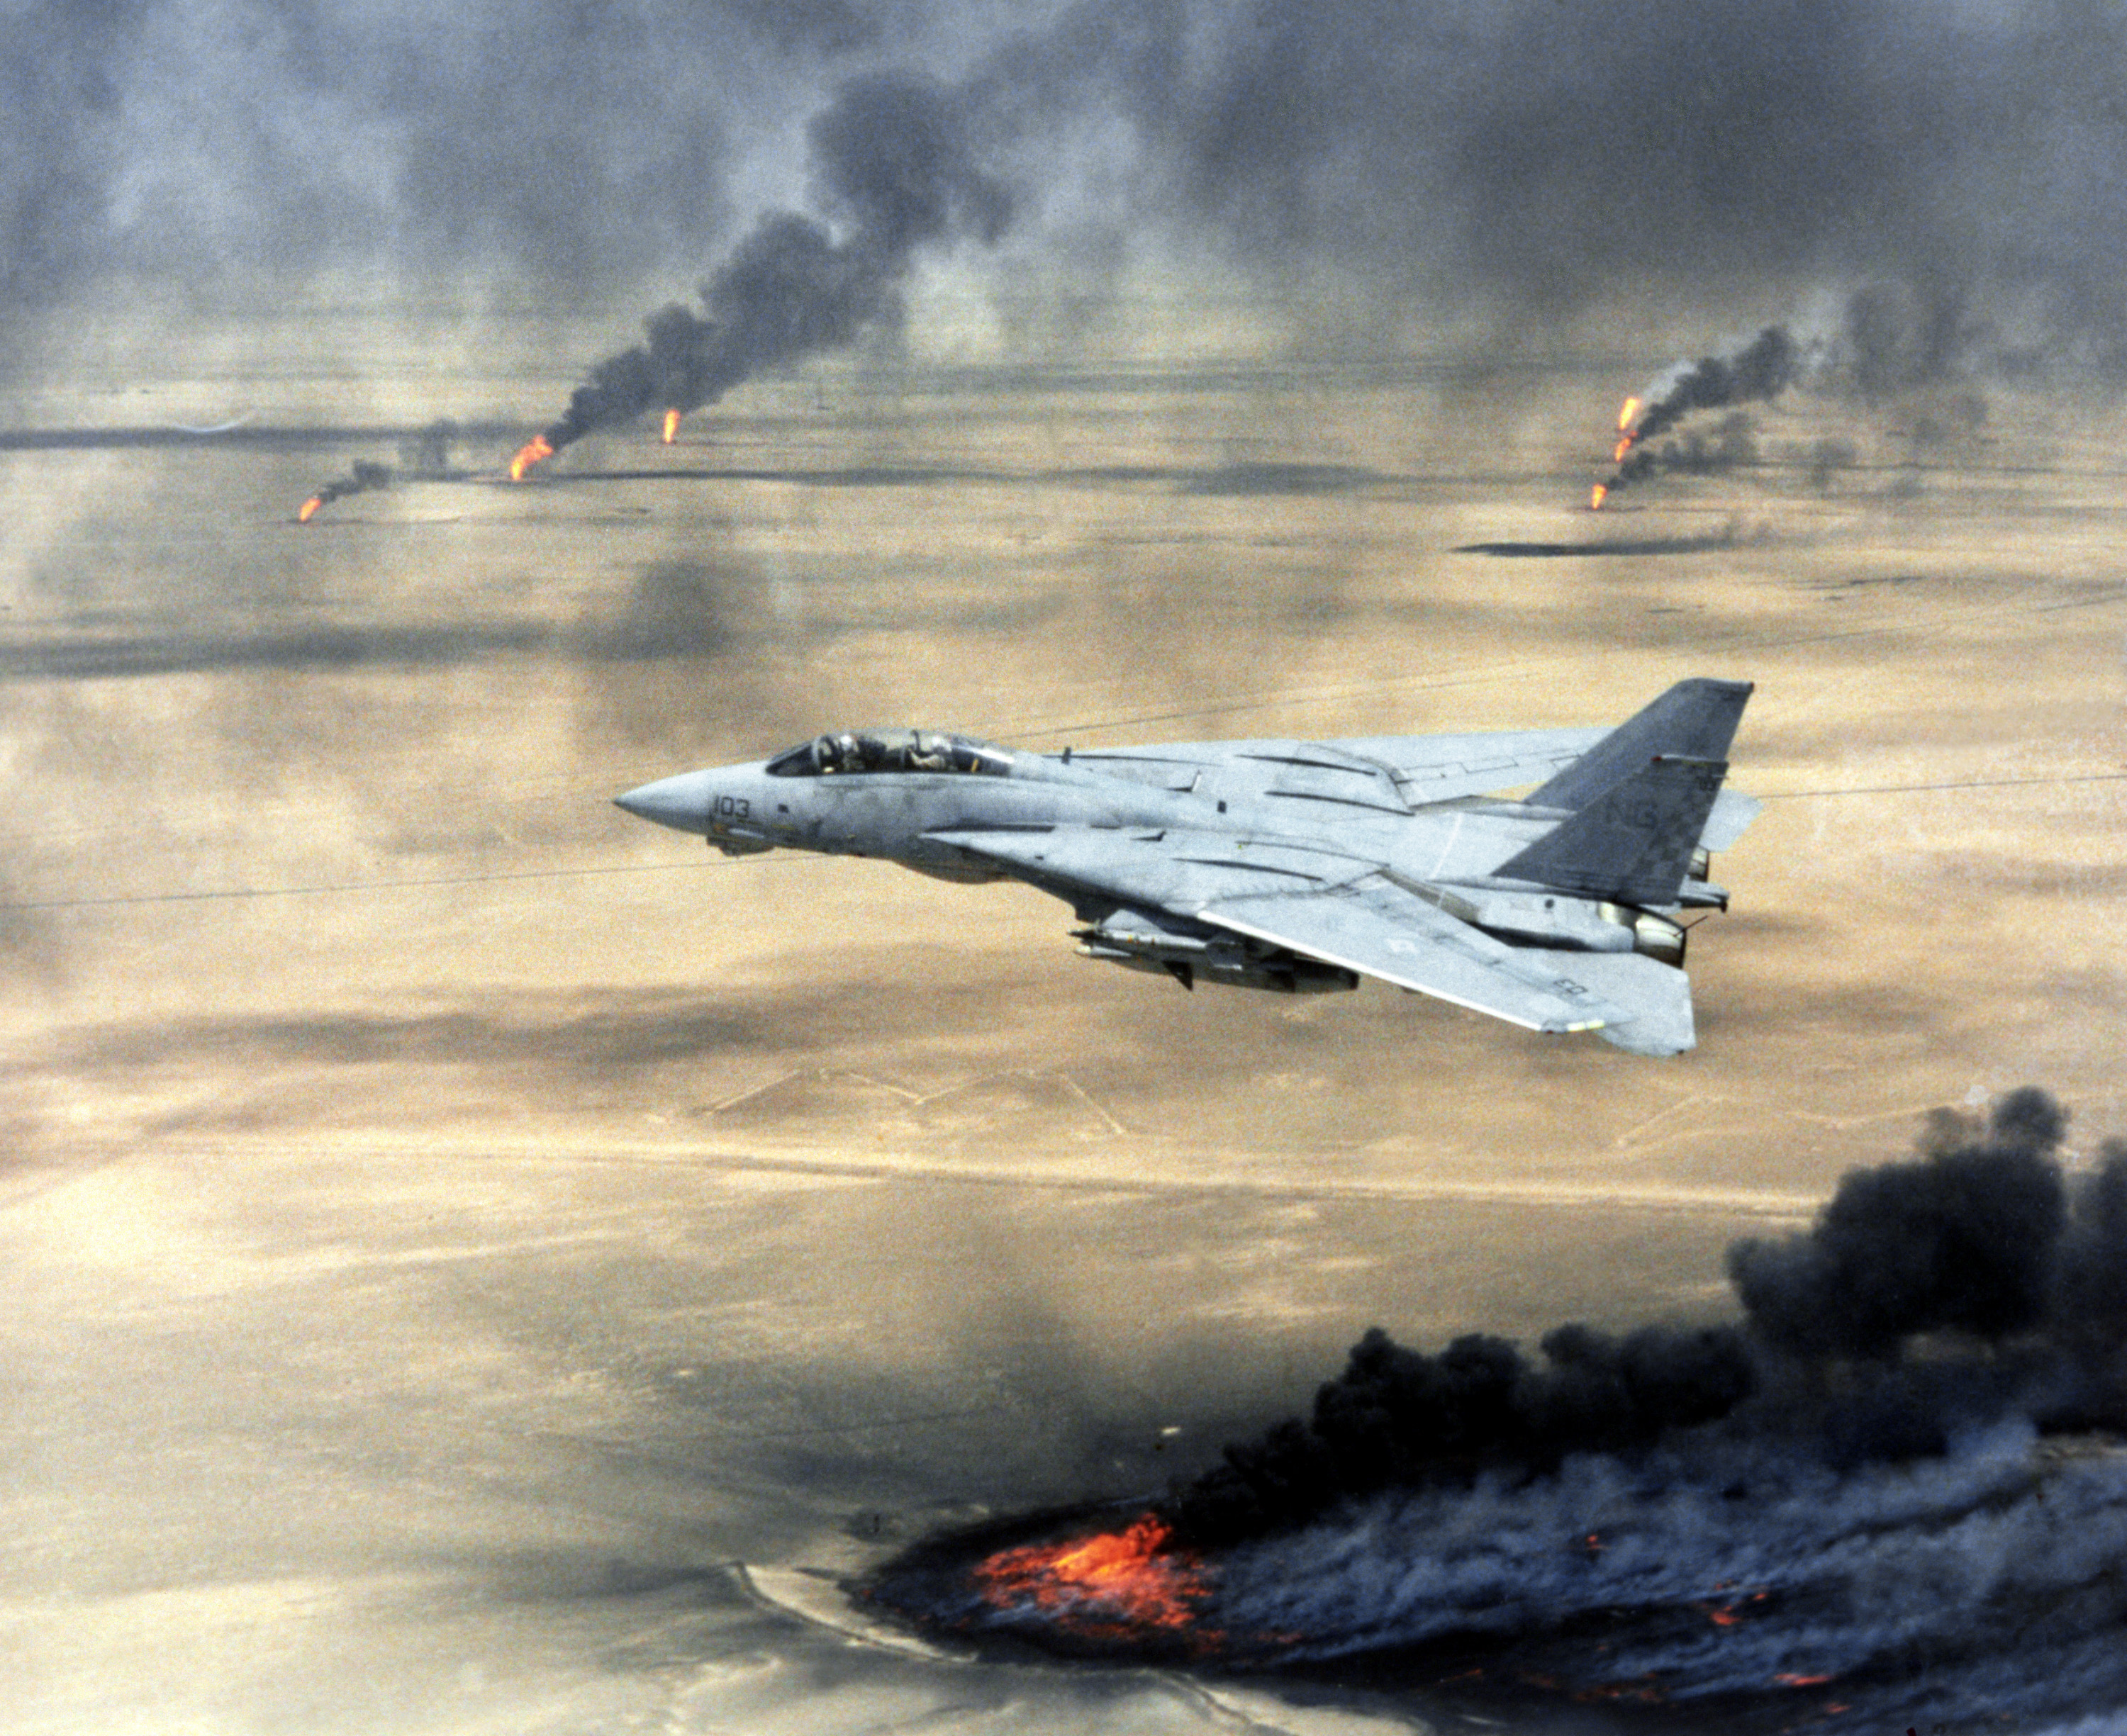 Copy negative of a US Navy (USN) F-14A Tomcat, Fighter Squadron 211 (VF-211), Naval Air Station (NAS) Oceana, Virginia Beach, Virginia (VA), in flight over burning Kuwaiti oil wells during Operation DESERT STORM, February 1, 1991